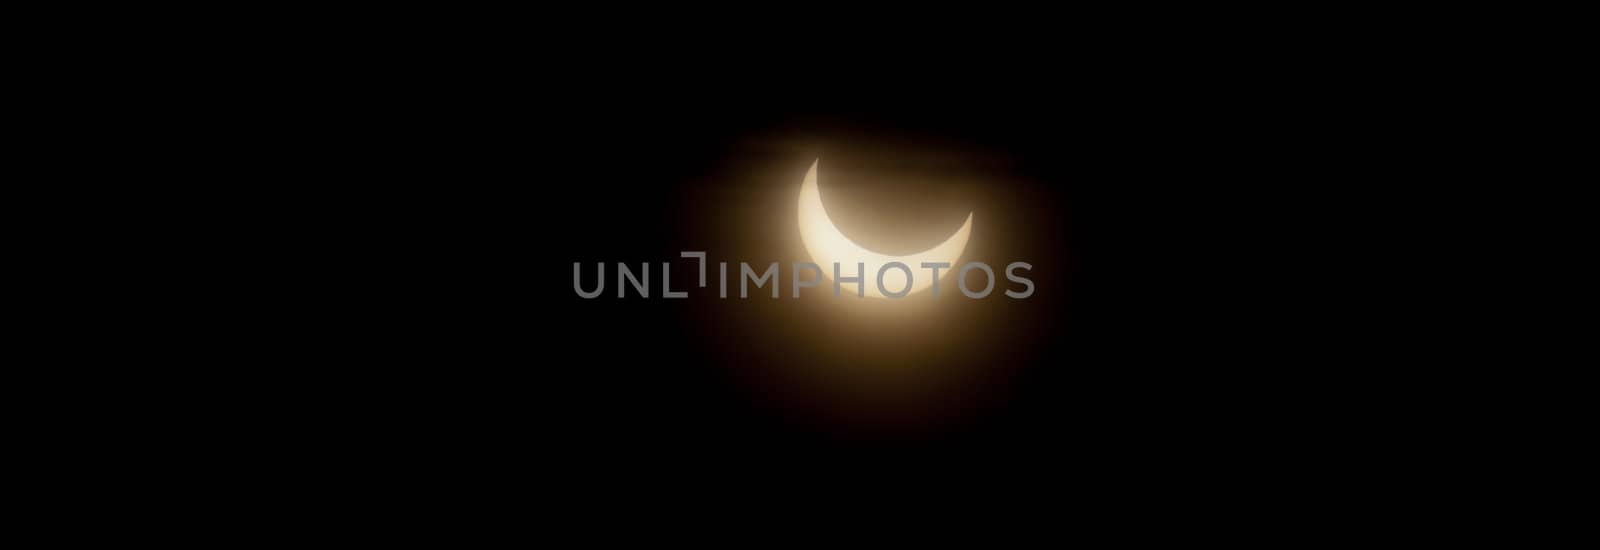 solar eclipse, January 4th 2011 by phbcz